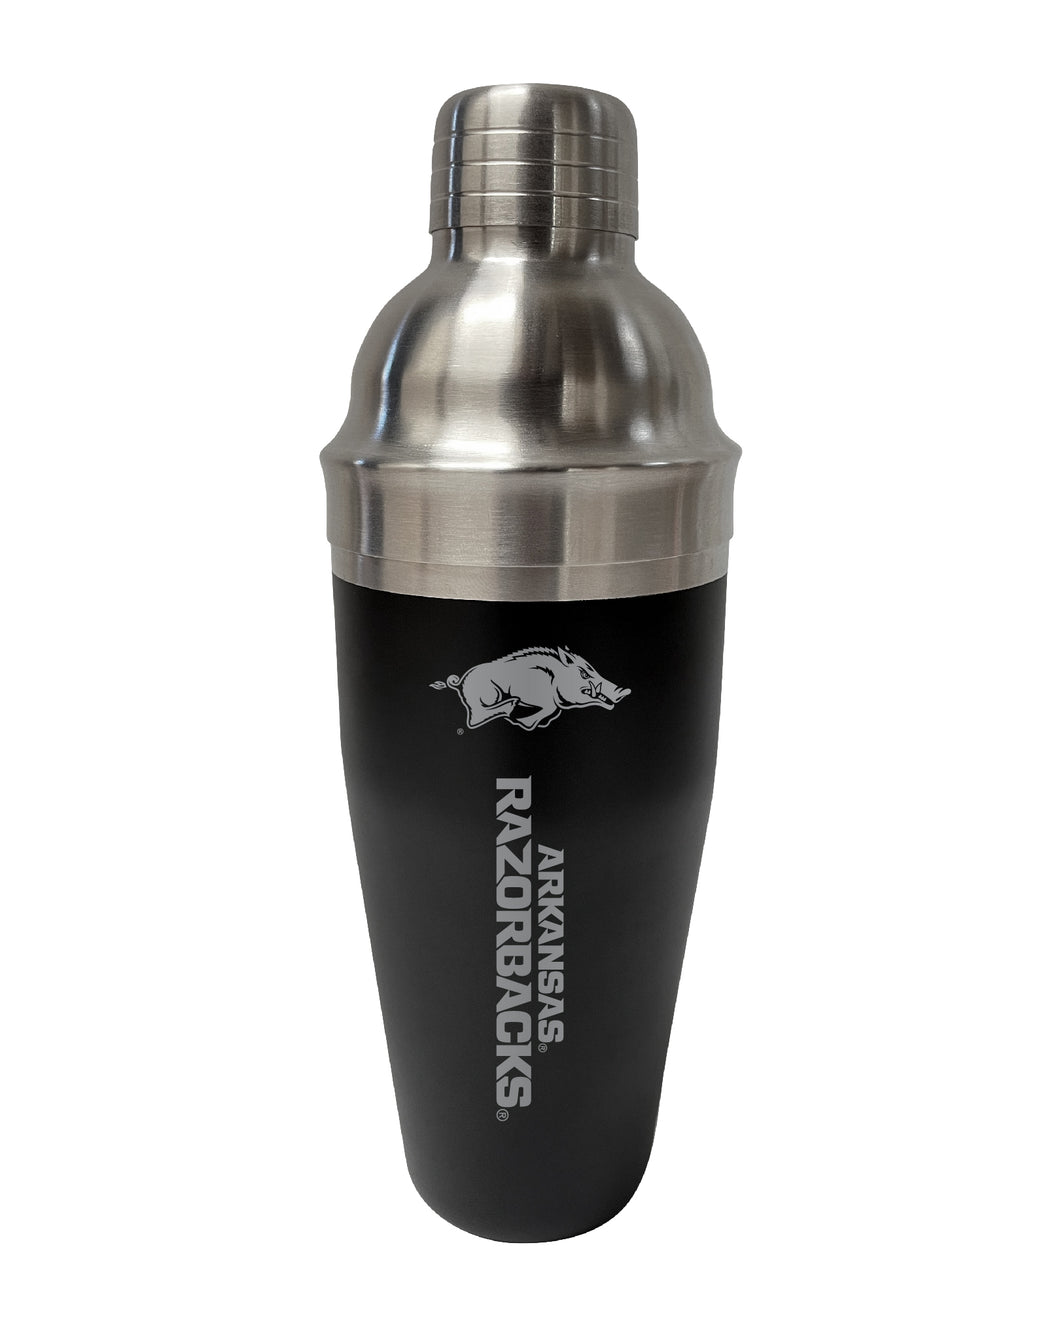 Arkansas Razorbacks NCAA Official 24 oz Engraved Stainless Steel Cocktail Shaker | College Team Spirit Drink Mixer